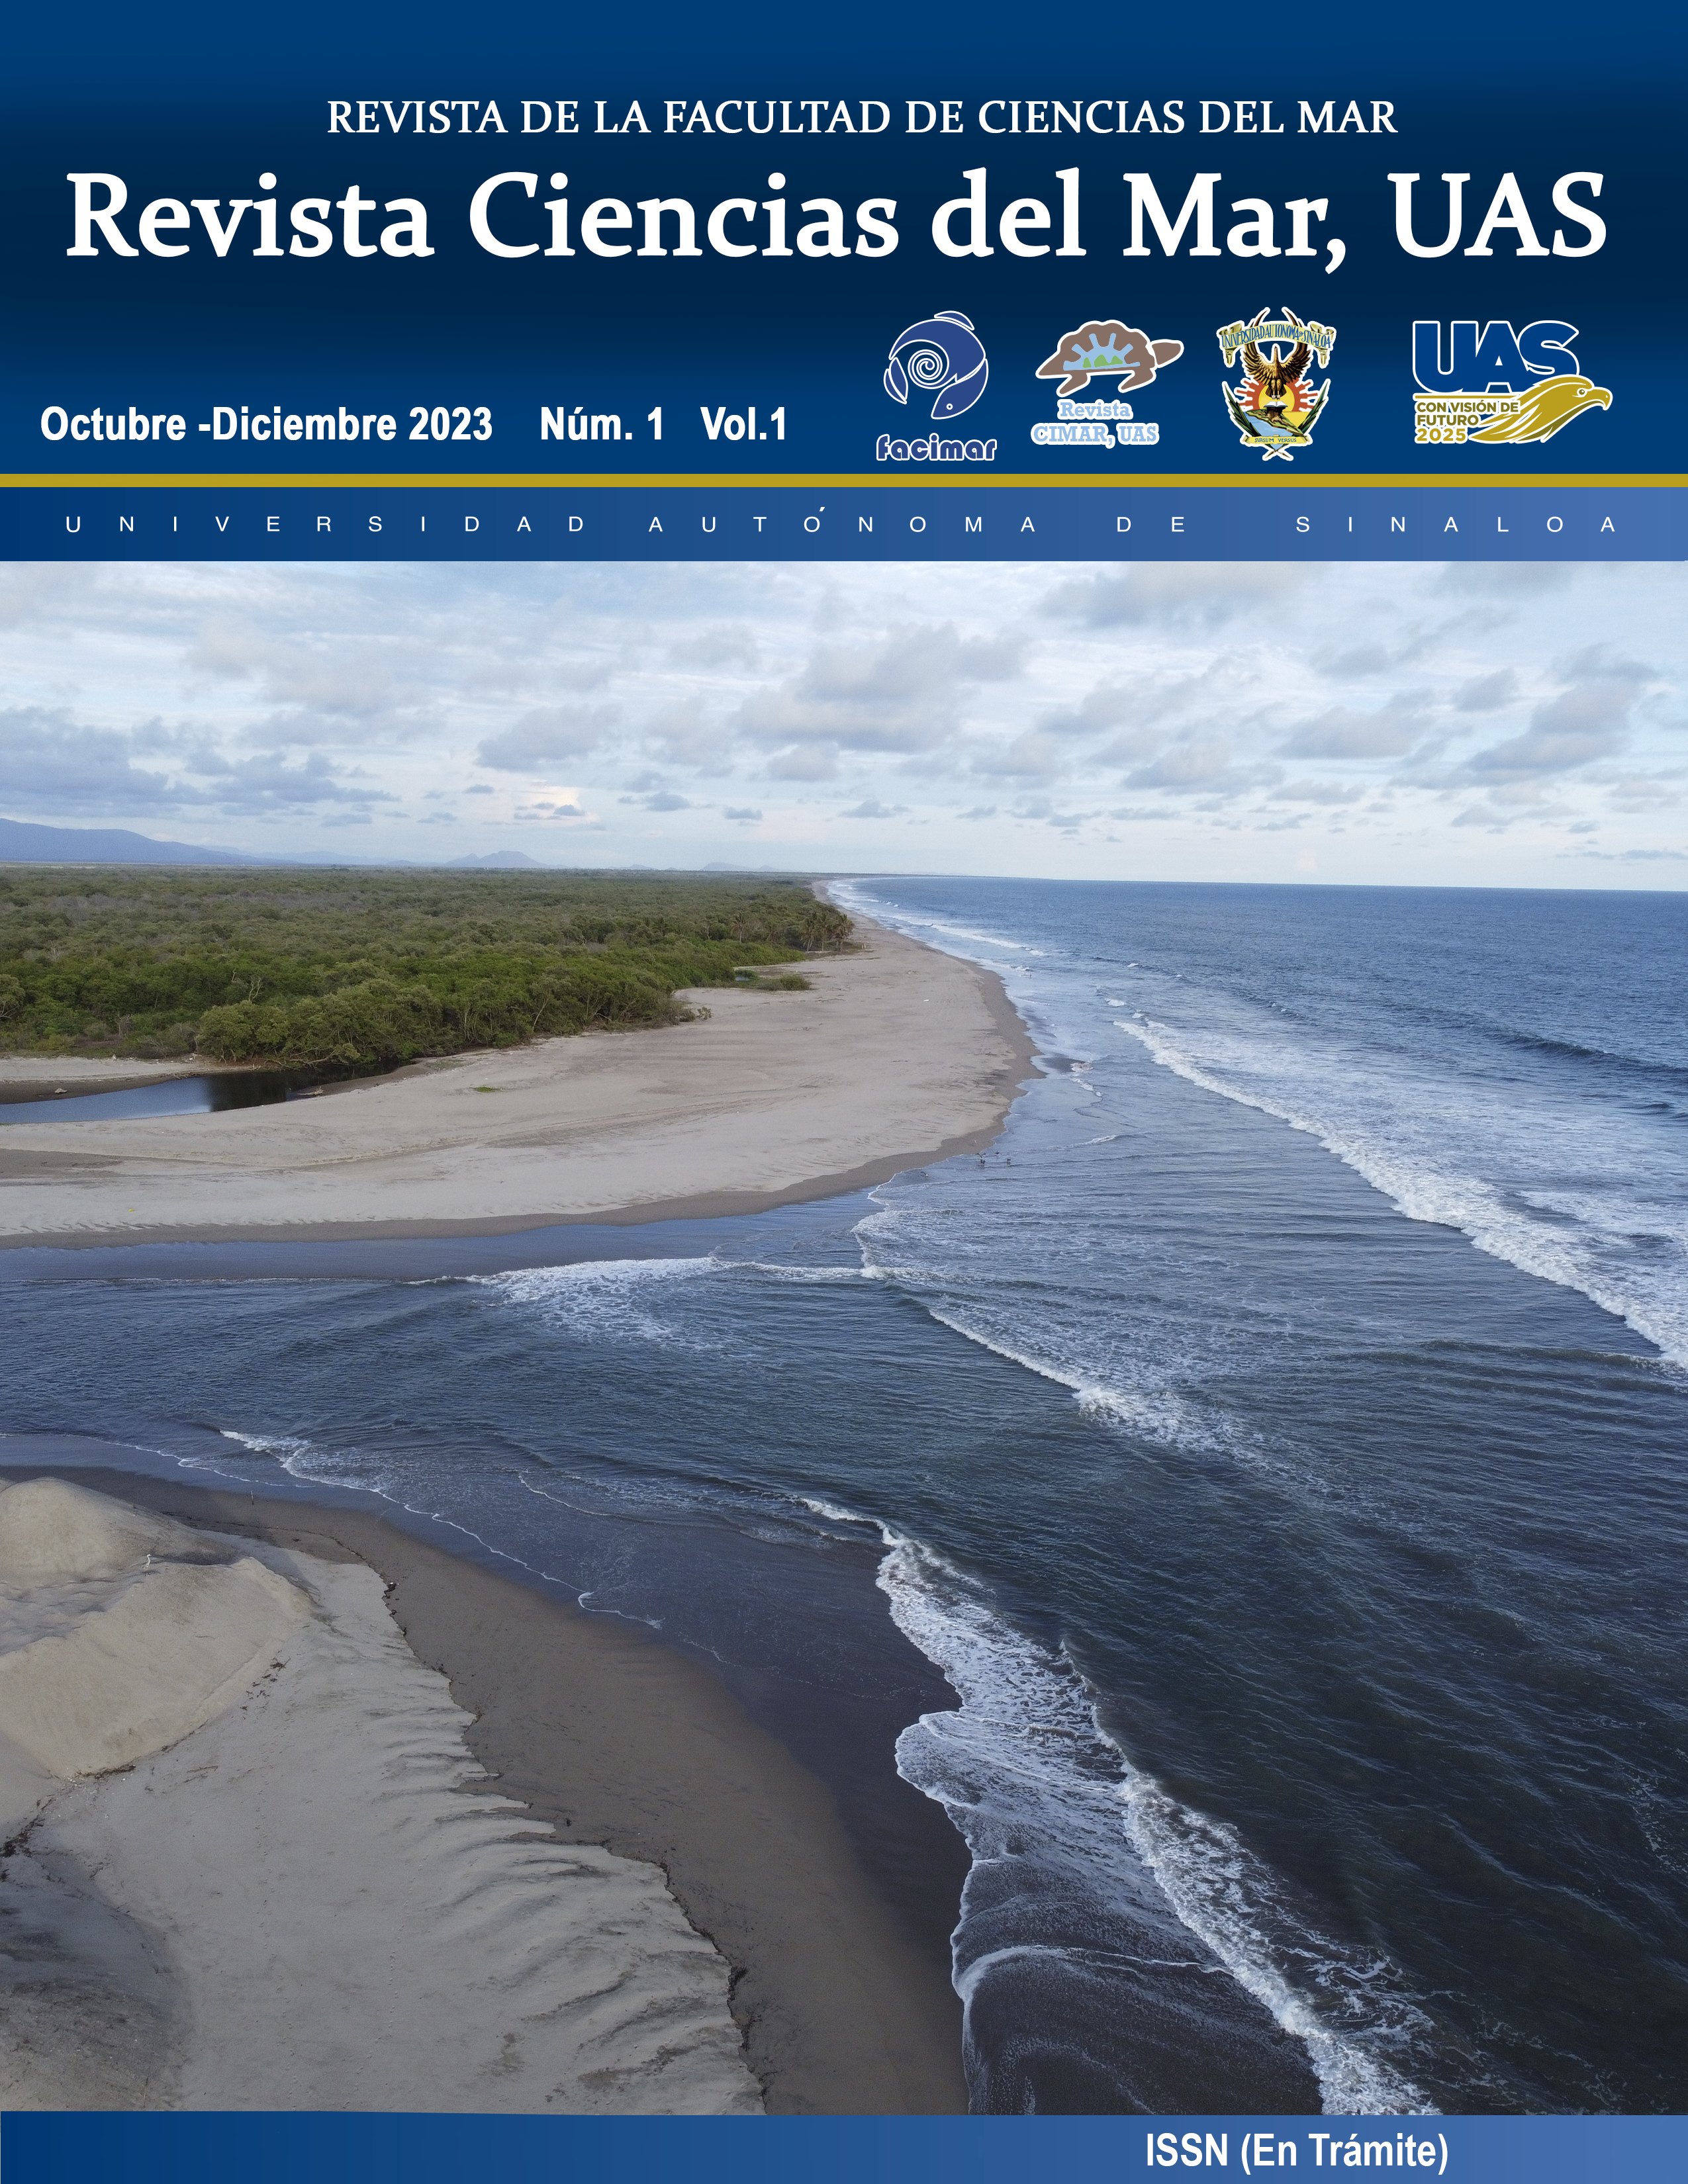 Núm. 1 Vol. 1 Revista Ciencias del Mar, UAS.